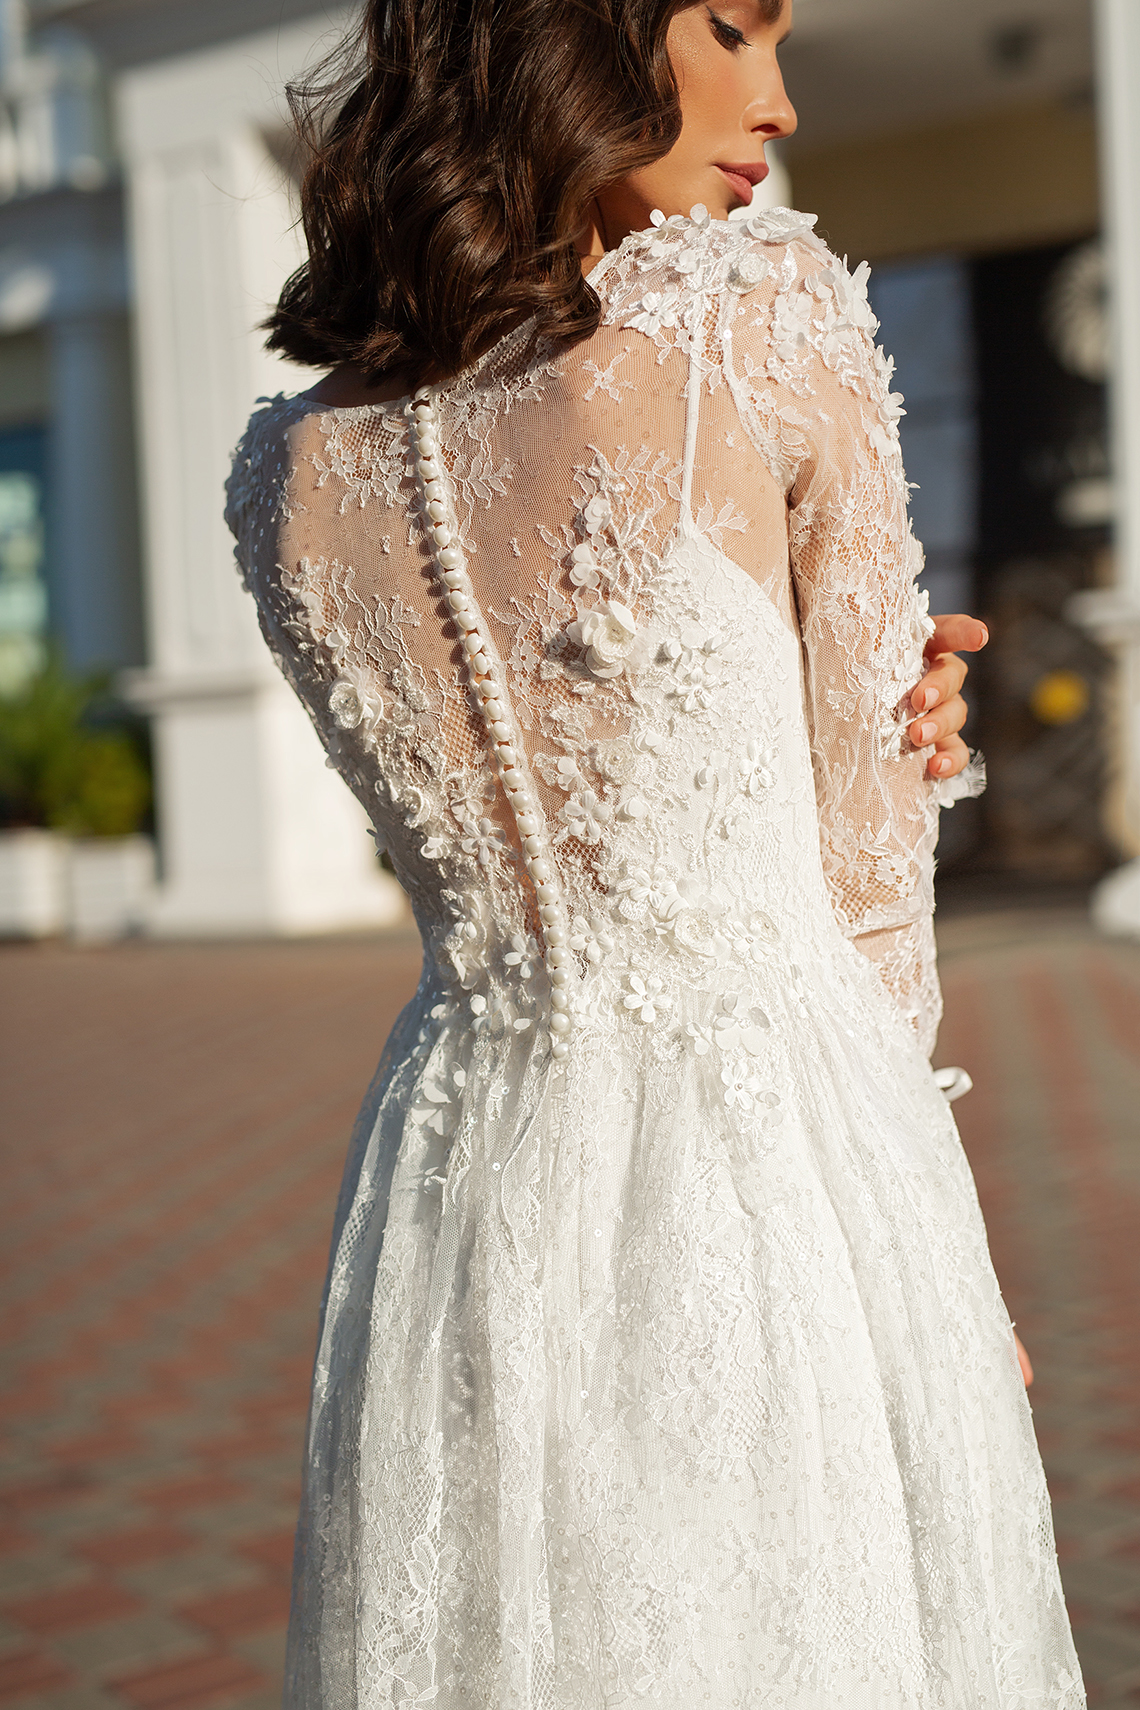 Feminine Simple Minimalistic Wedding Dresses by Mila Bridal 2020 2021 – Bridal Musings 38